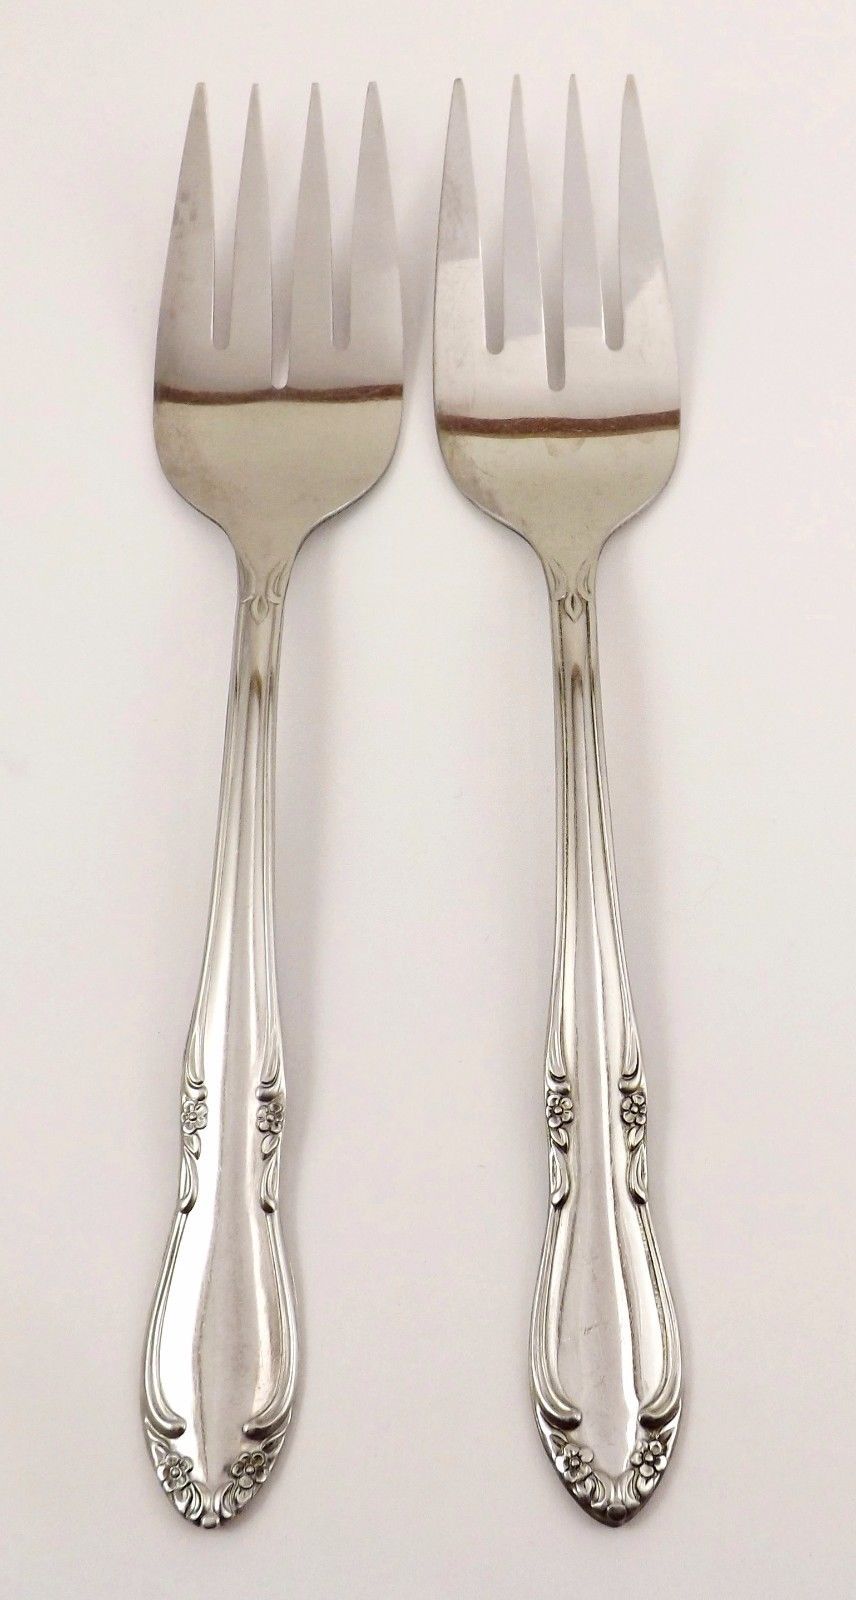 Primary image for Oneida Custom "Plantation" Stainless Flatware-Set of 2 Meat Serving Forks Floral